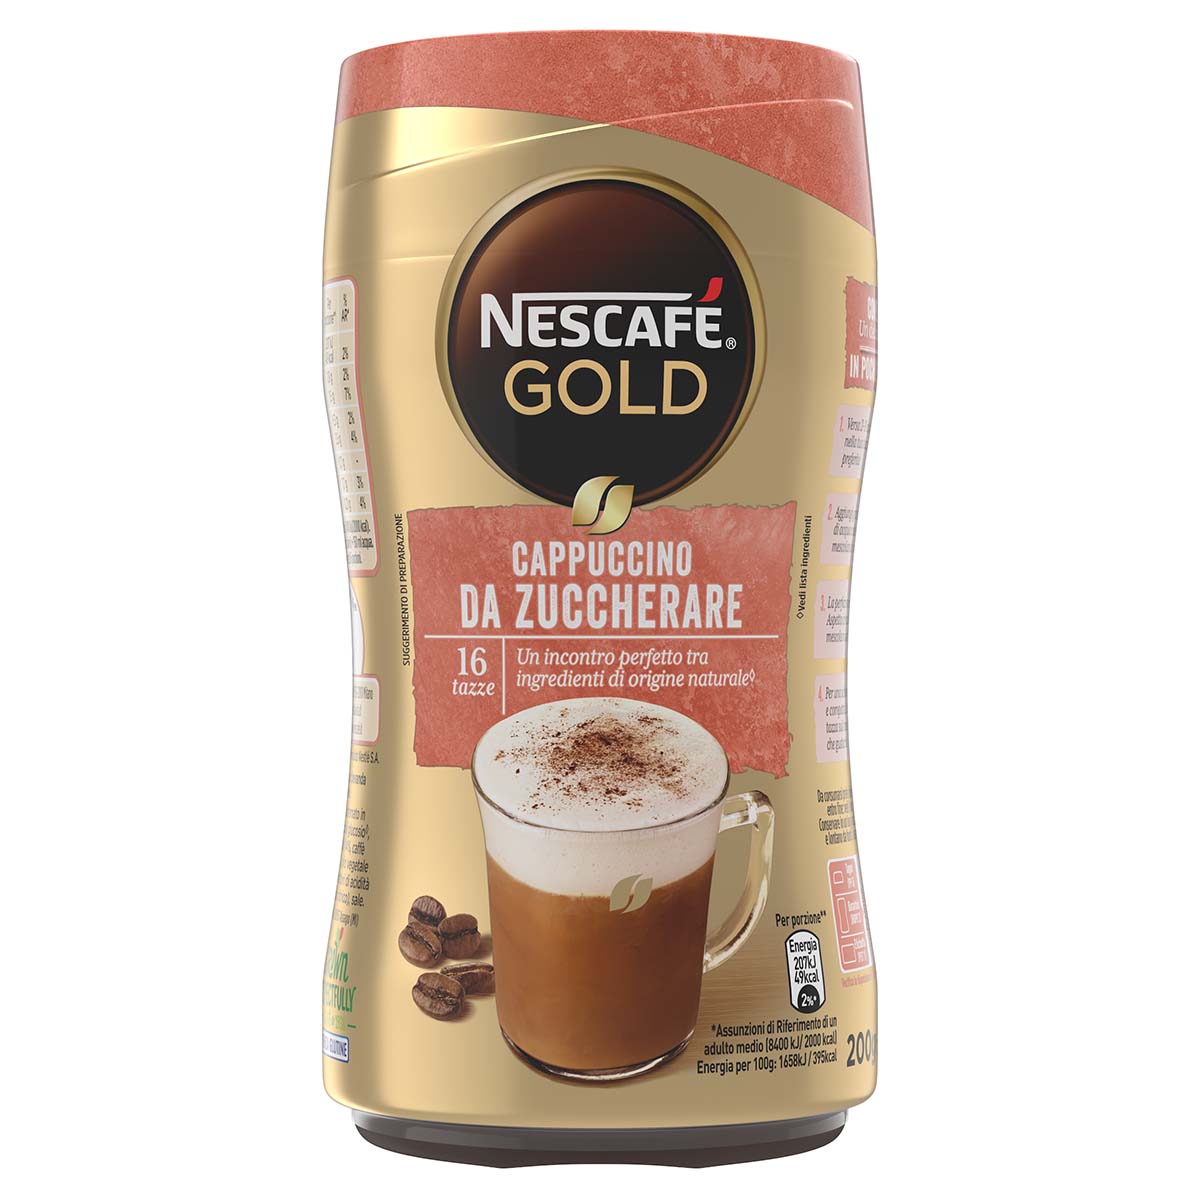 Nescafé GOLD CAPPUCCINO DA ZUCCHERARE Preparato Solubile Per Cappuccino Da Zuccherare Barattolo 200g